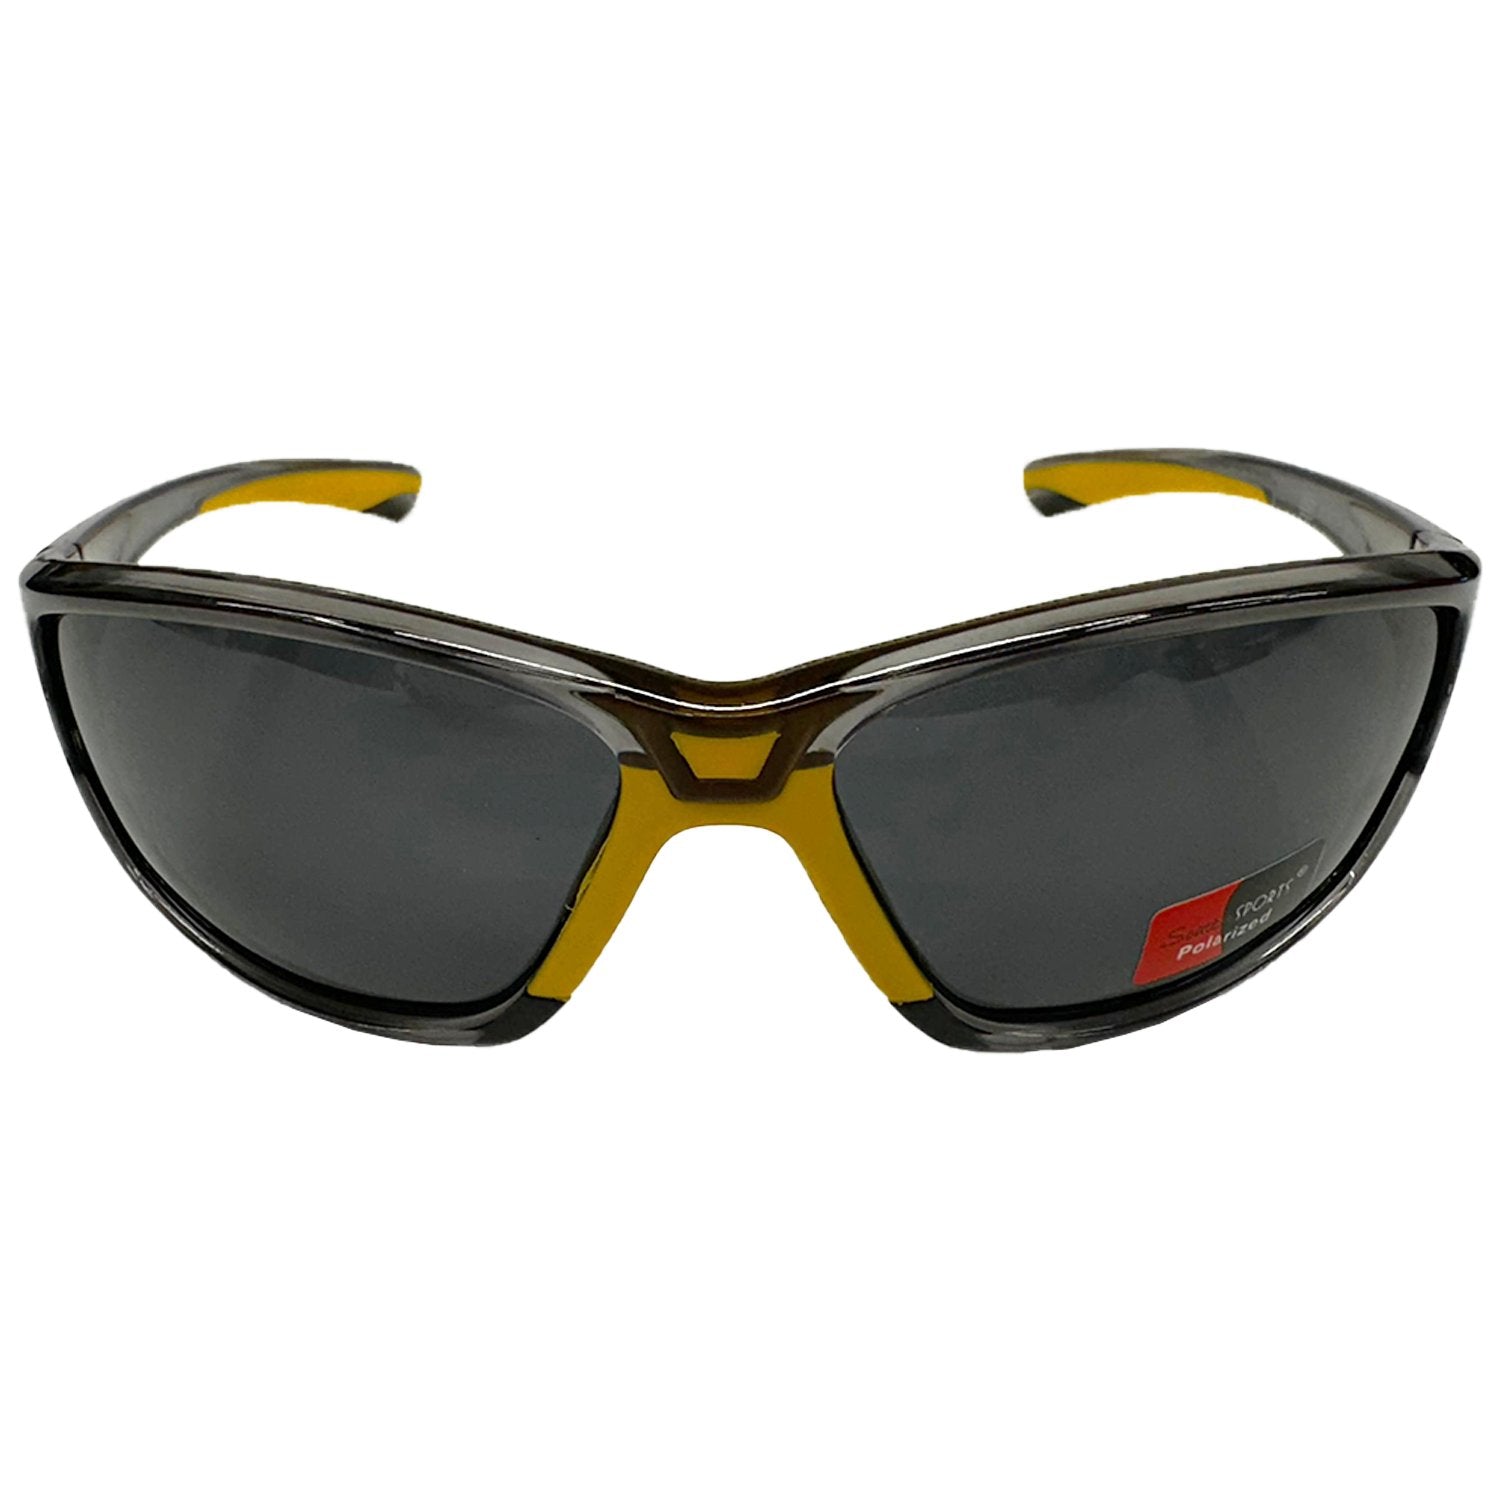 Buy Gokyo Kalimpong Polaroid UV Sunglasses Yellow | Sunglasses at Gokyo Outdoor Clothing & Gear